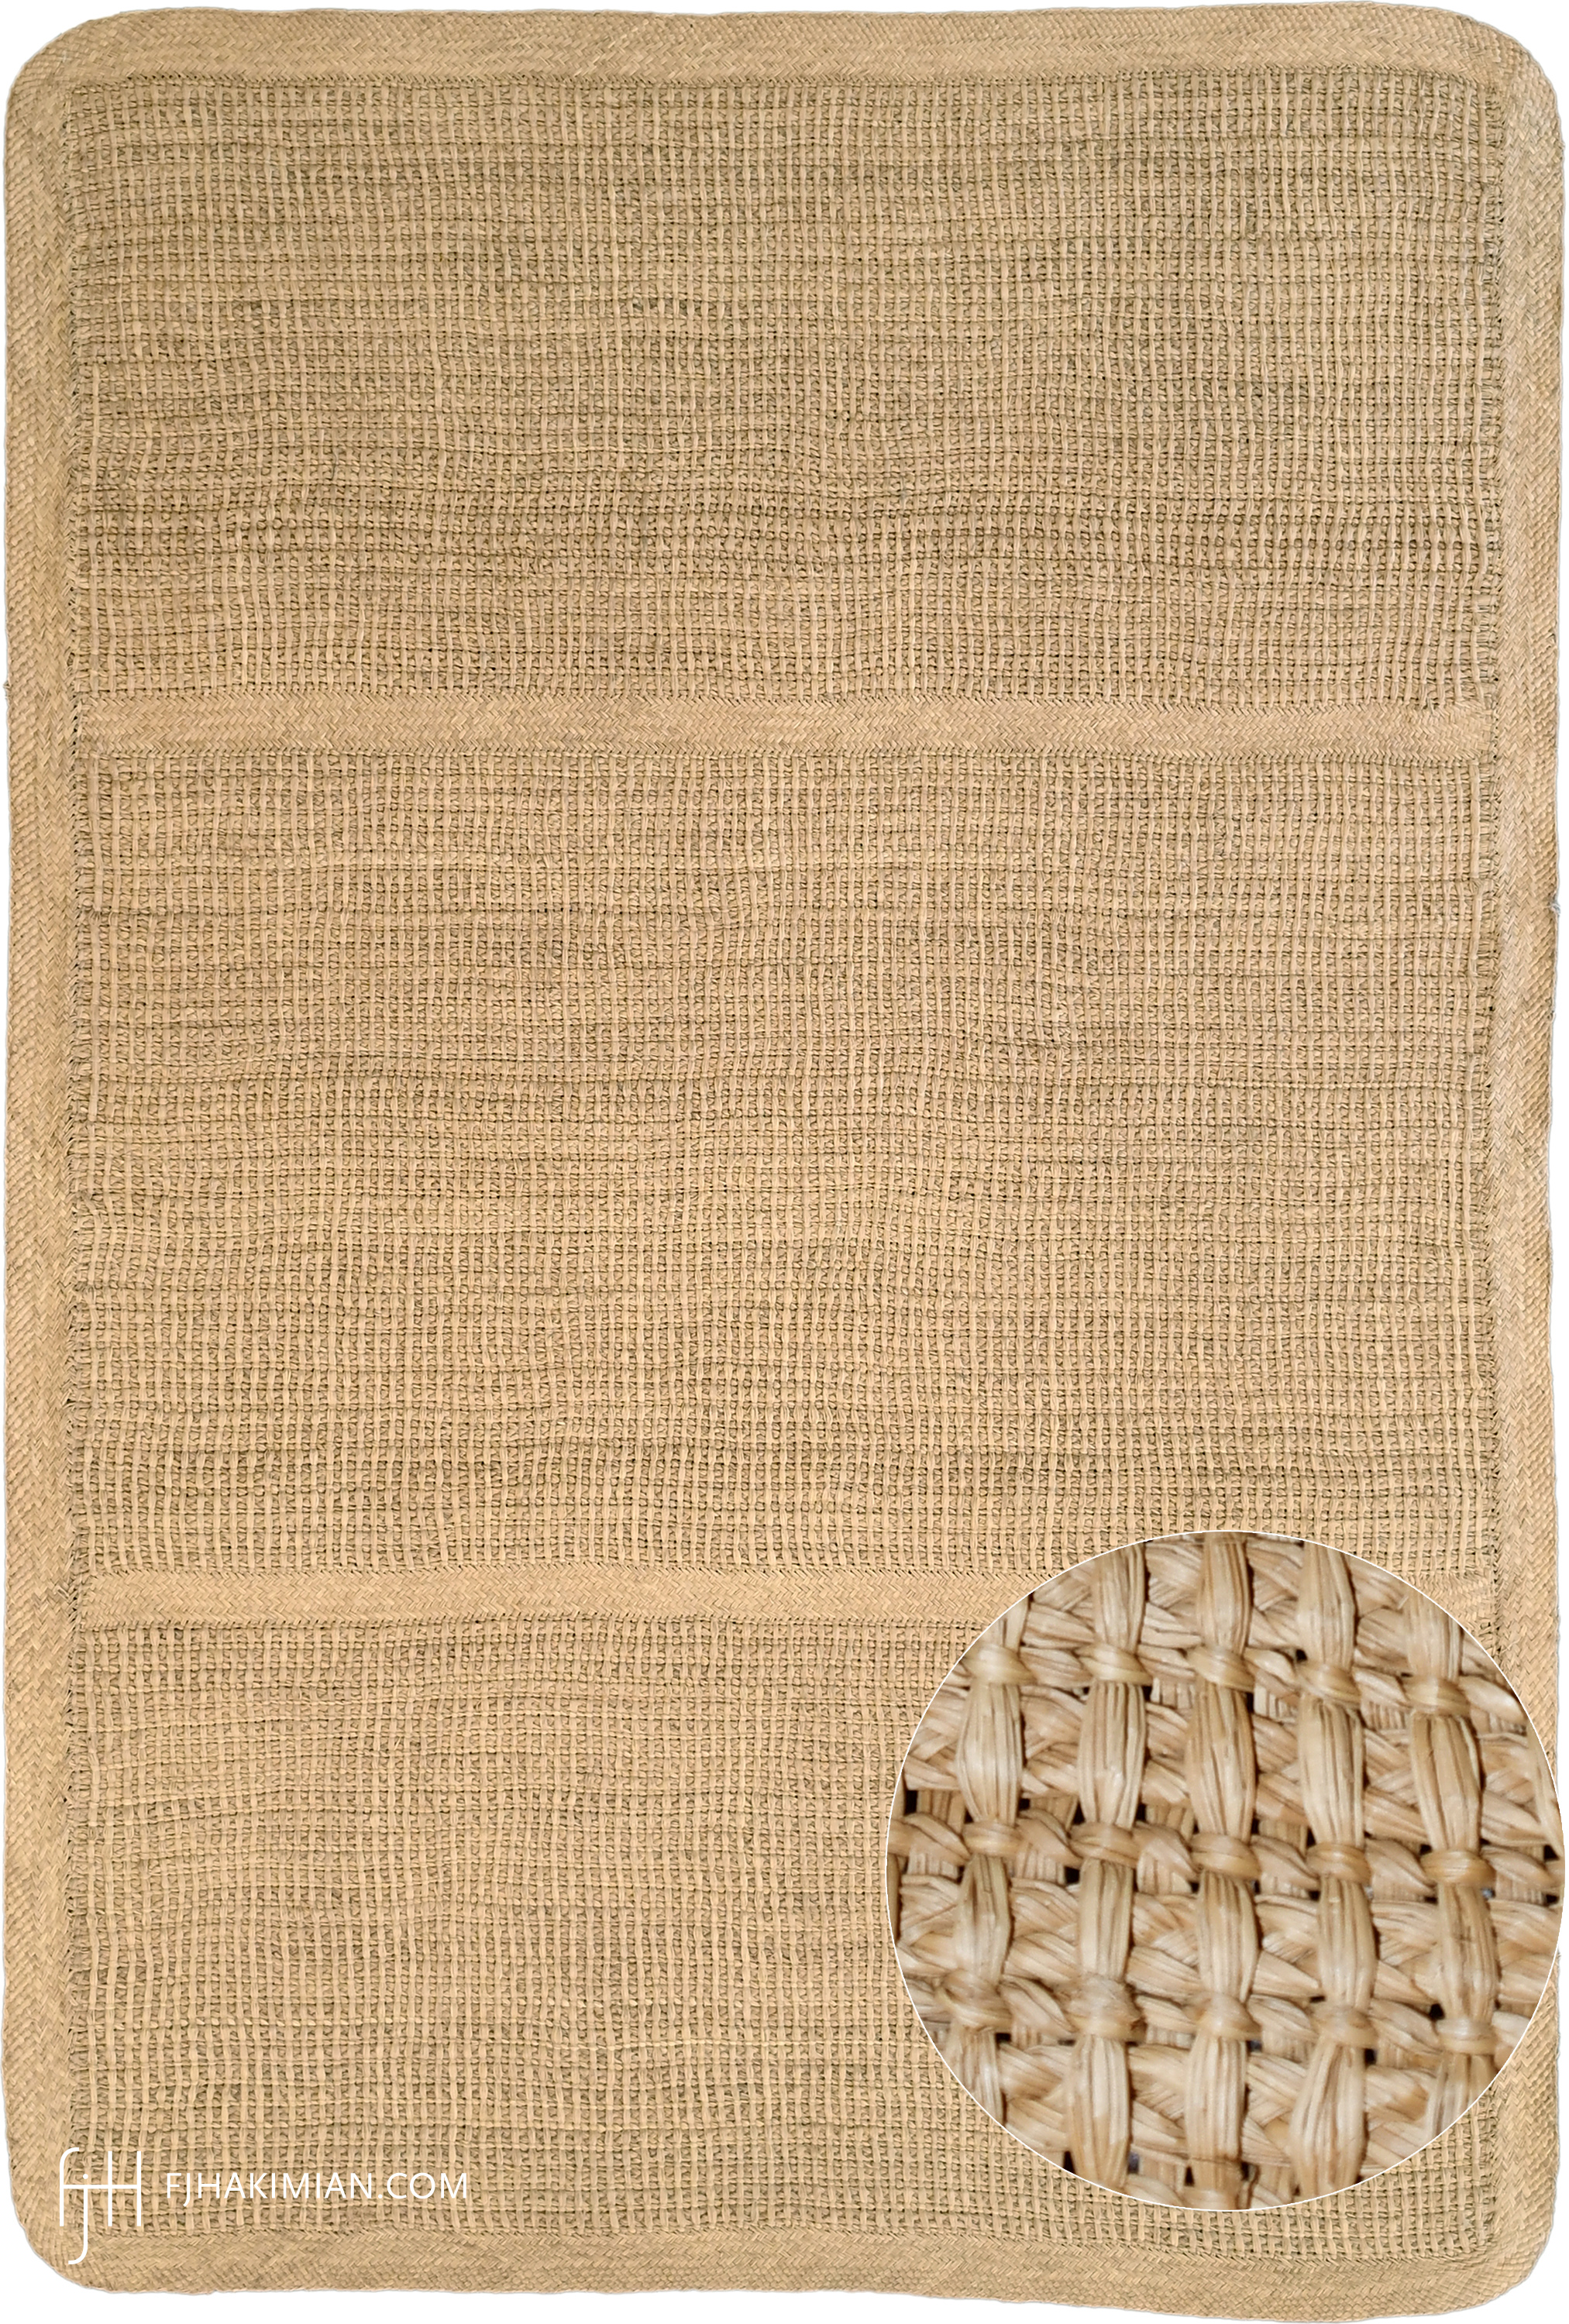 South American Mat #21585 | FJ Hakimian | Carpet Gallery in New York